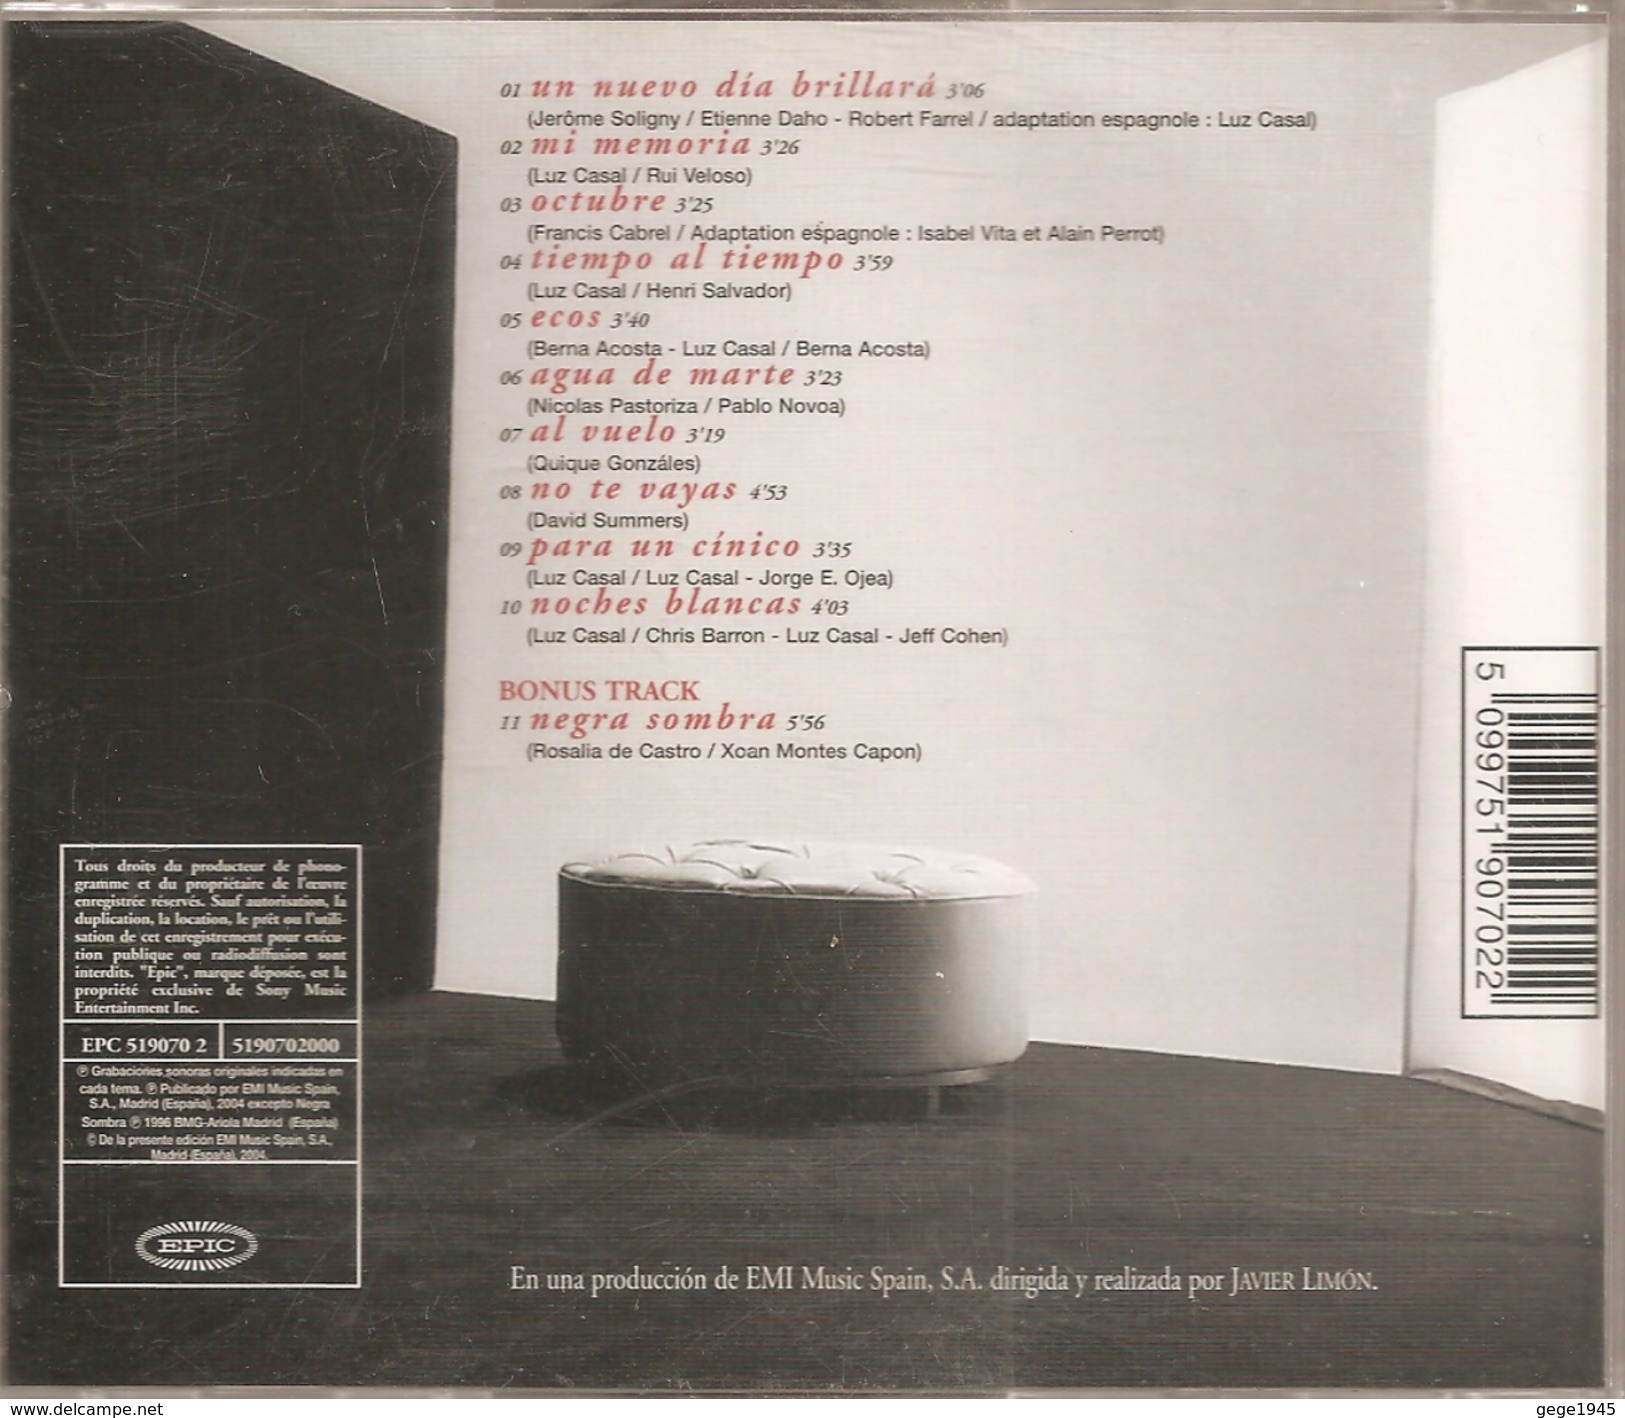 CD  Luz Casal  "  Sencilla  Alegria  "  De  2004  Avec  11  Titres - Other - Spanish Music